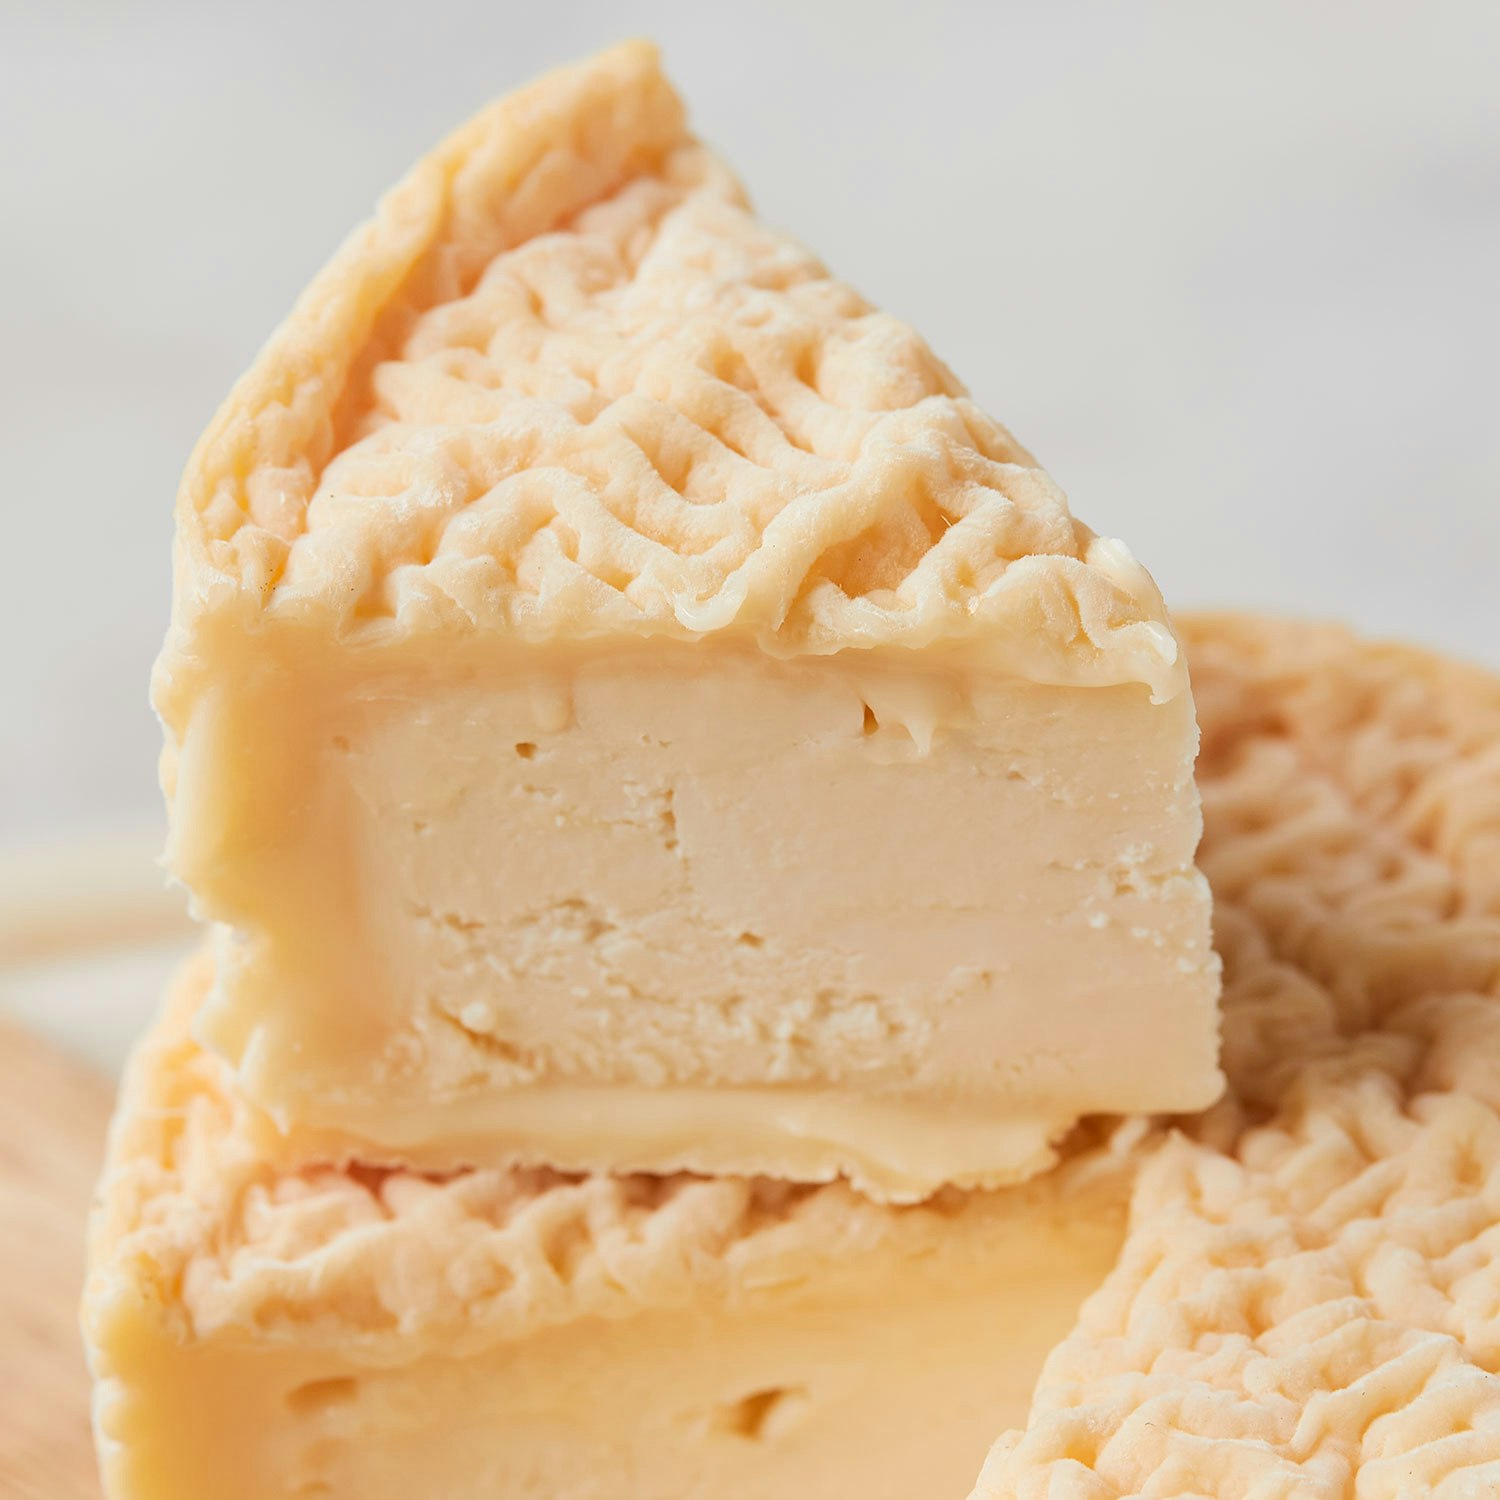 LAffin%C3%A9 au Chablis cheese